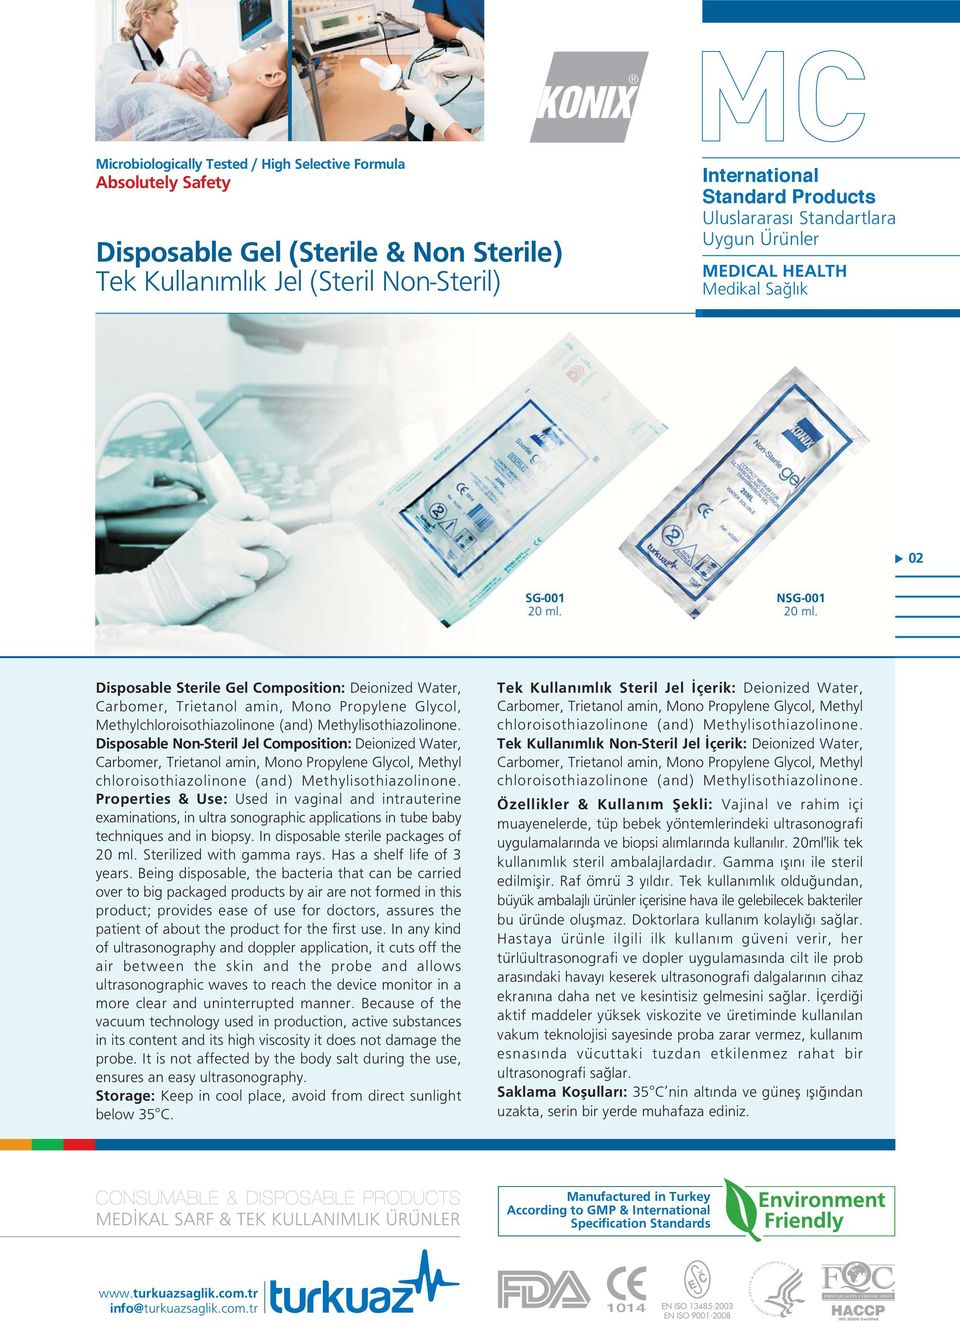 Disposable Non-Steril Jel Composition: Deionized Water, Carbomer, Trietanol amin, Mono Propylene Glycol, Methyl chloroisothiazolinone (and) Methylisothiazolinone.